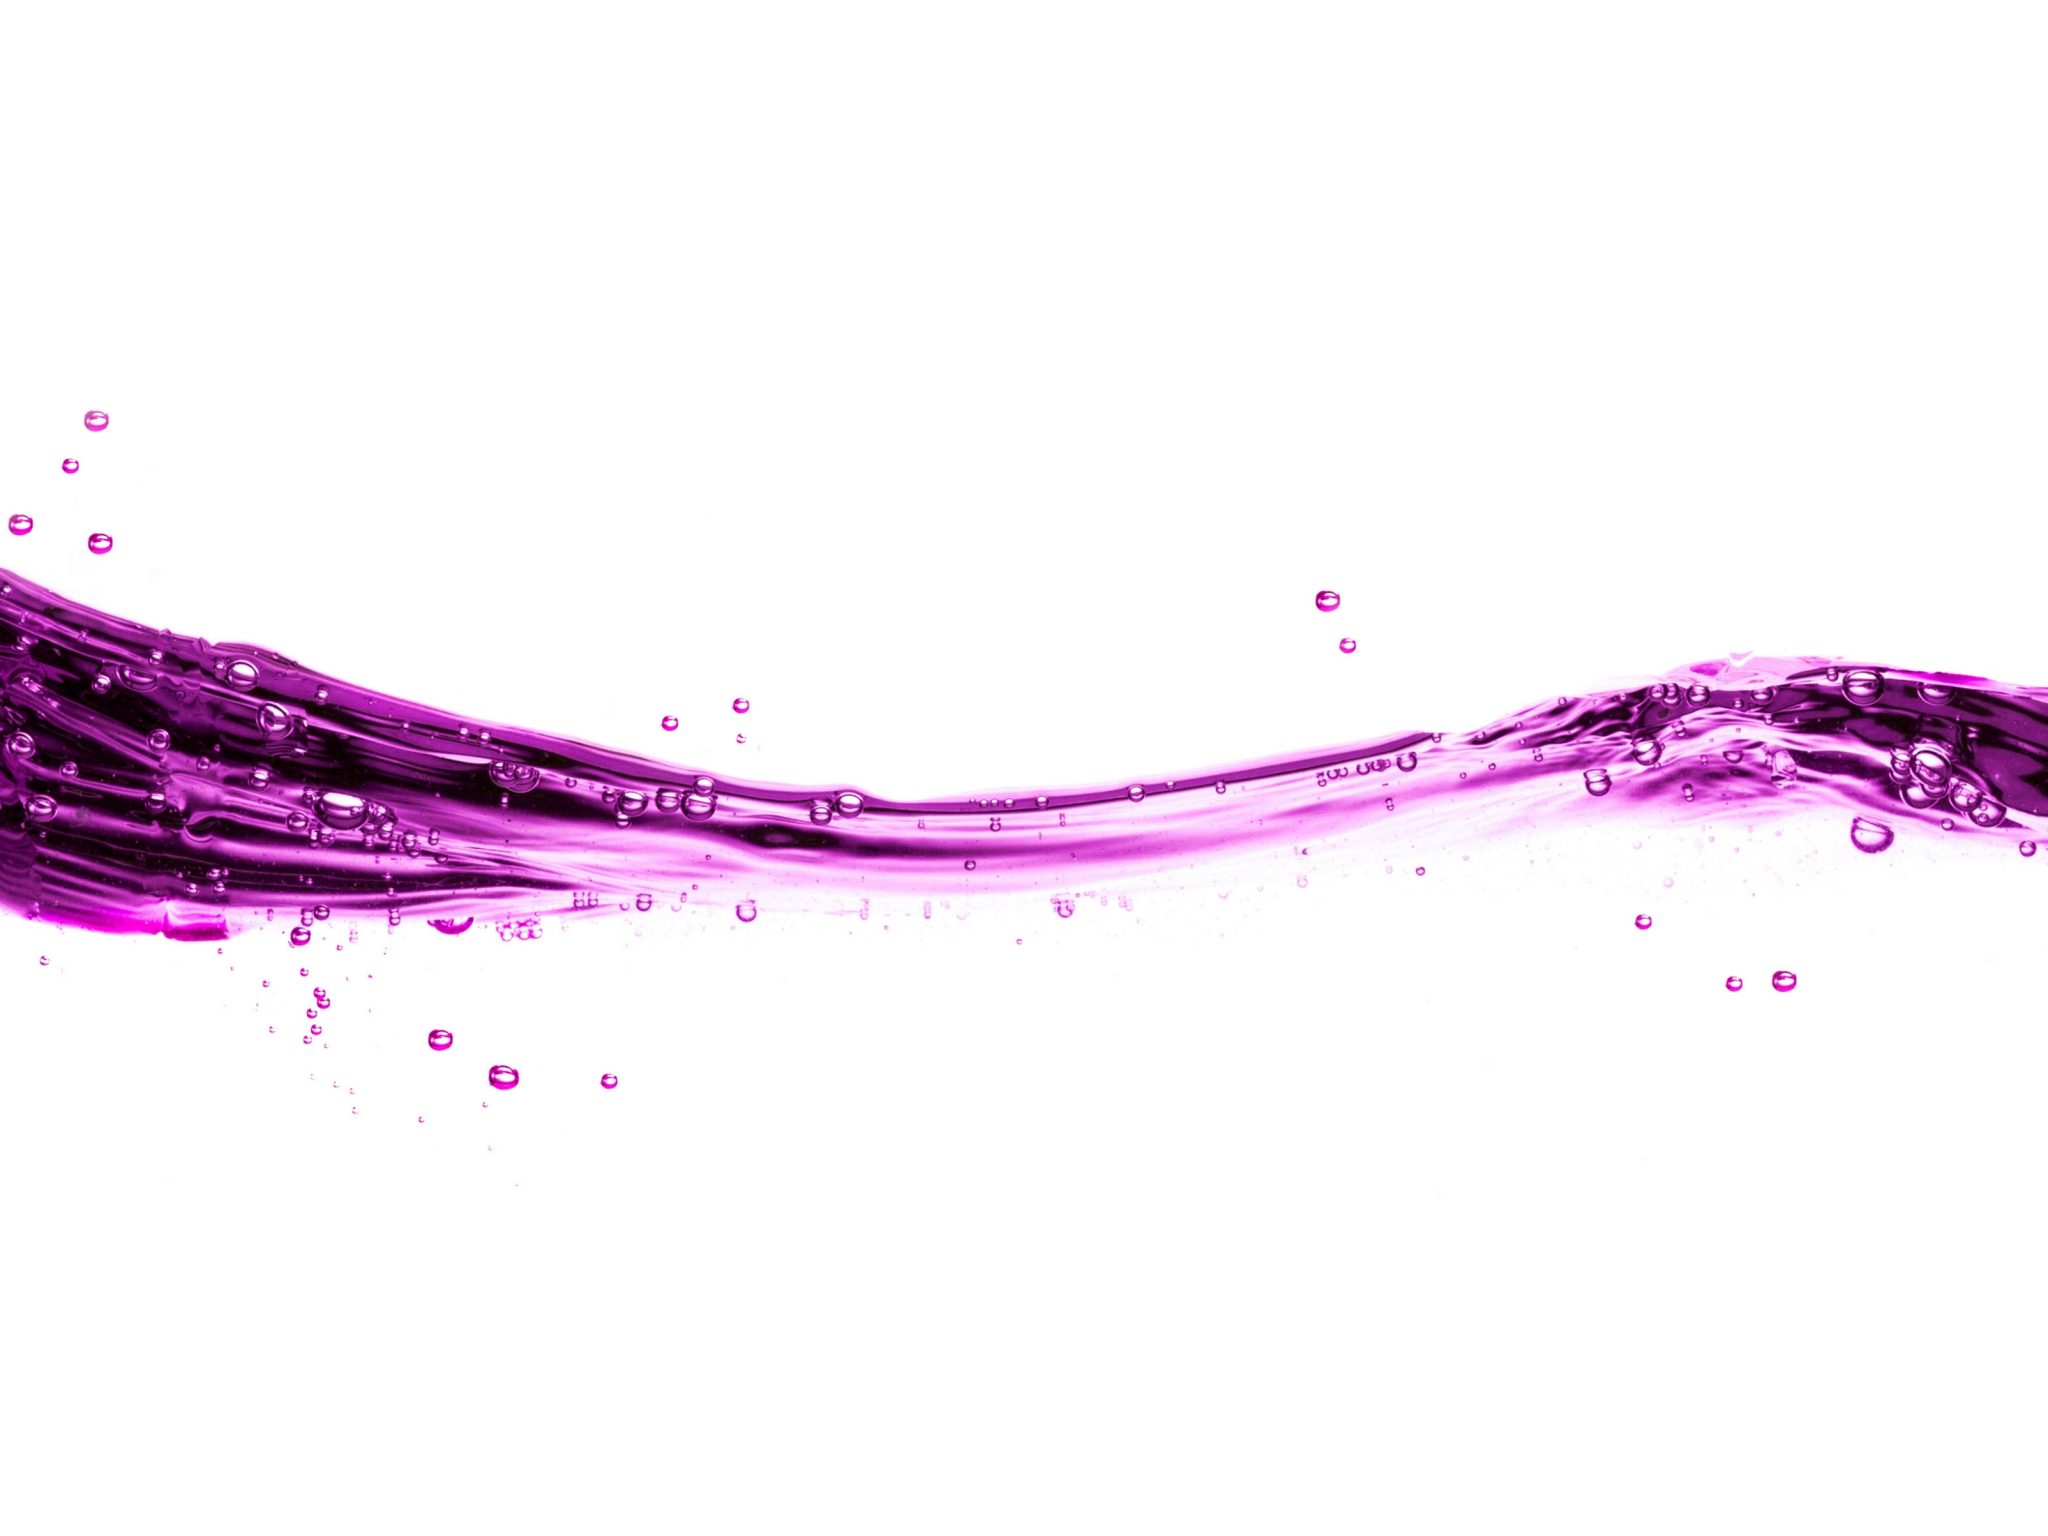 2048x1536 wallpaper Purple Water Splash White Background iPad Wallpaper 2048x1536 pixels resolution